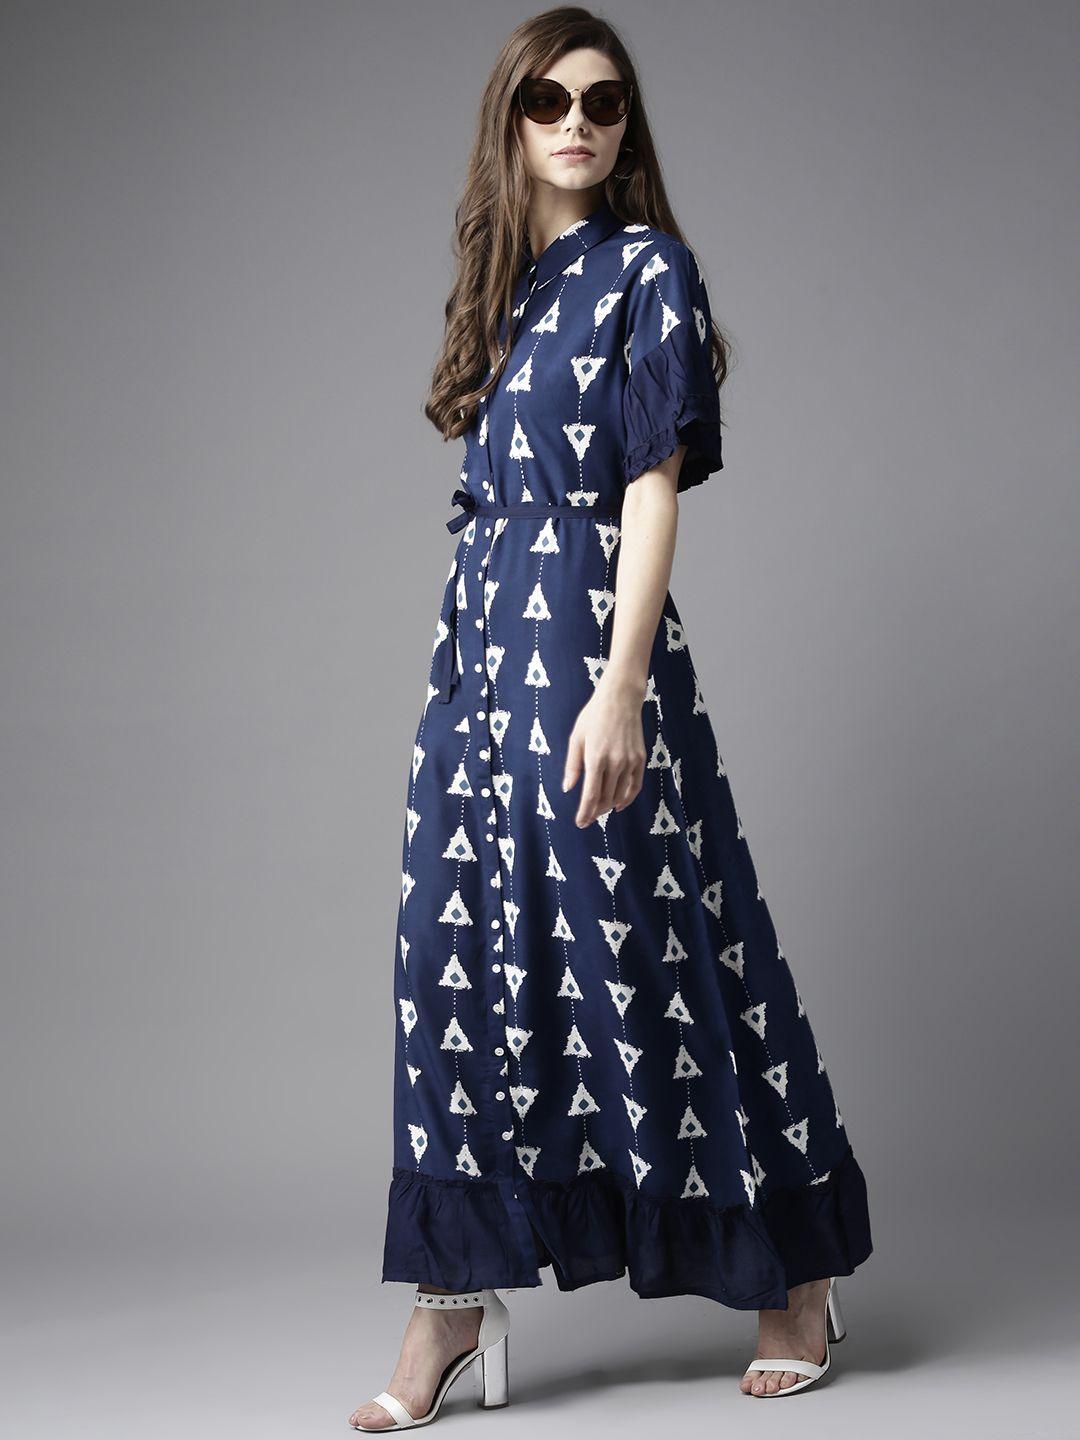 here&now navy blue & white geometric printed maxi shirt dress